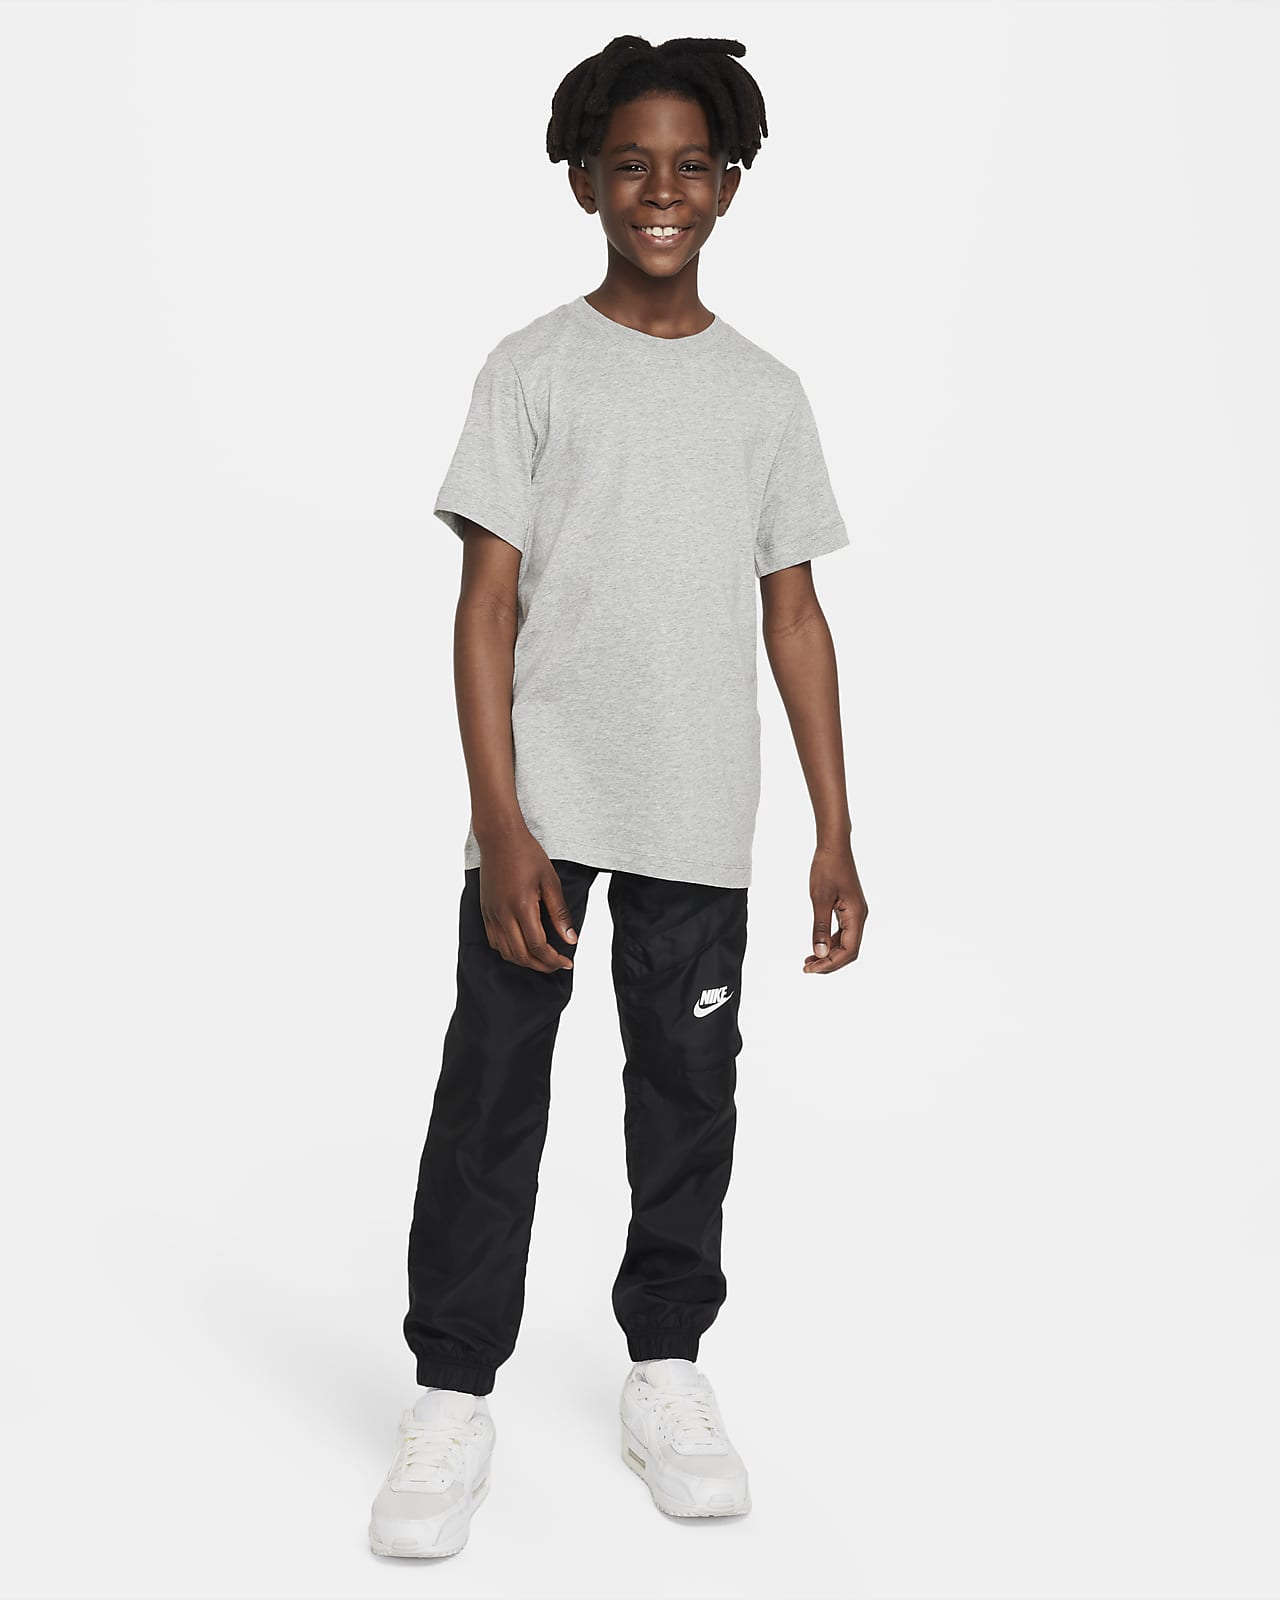 Nike Big Kids' Short-Sleeve T-Shirt. Nike.com